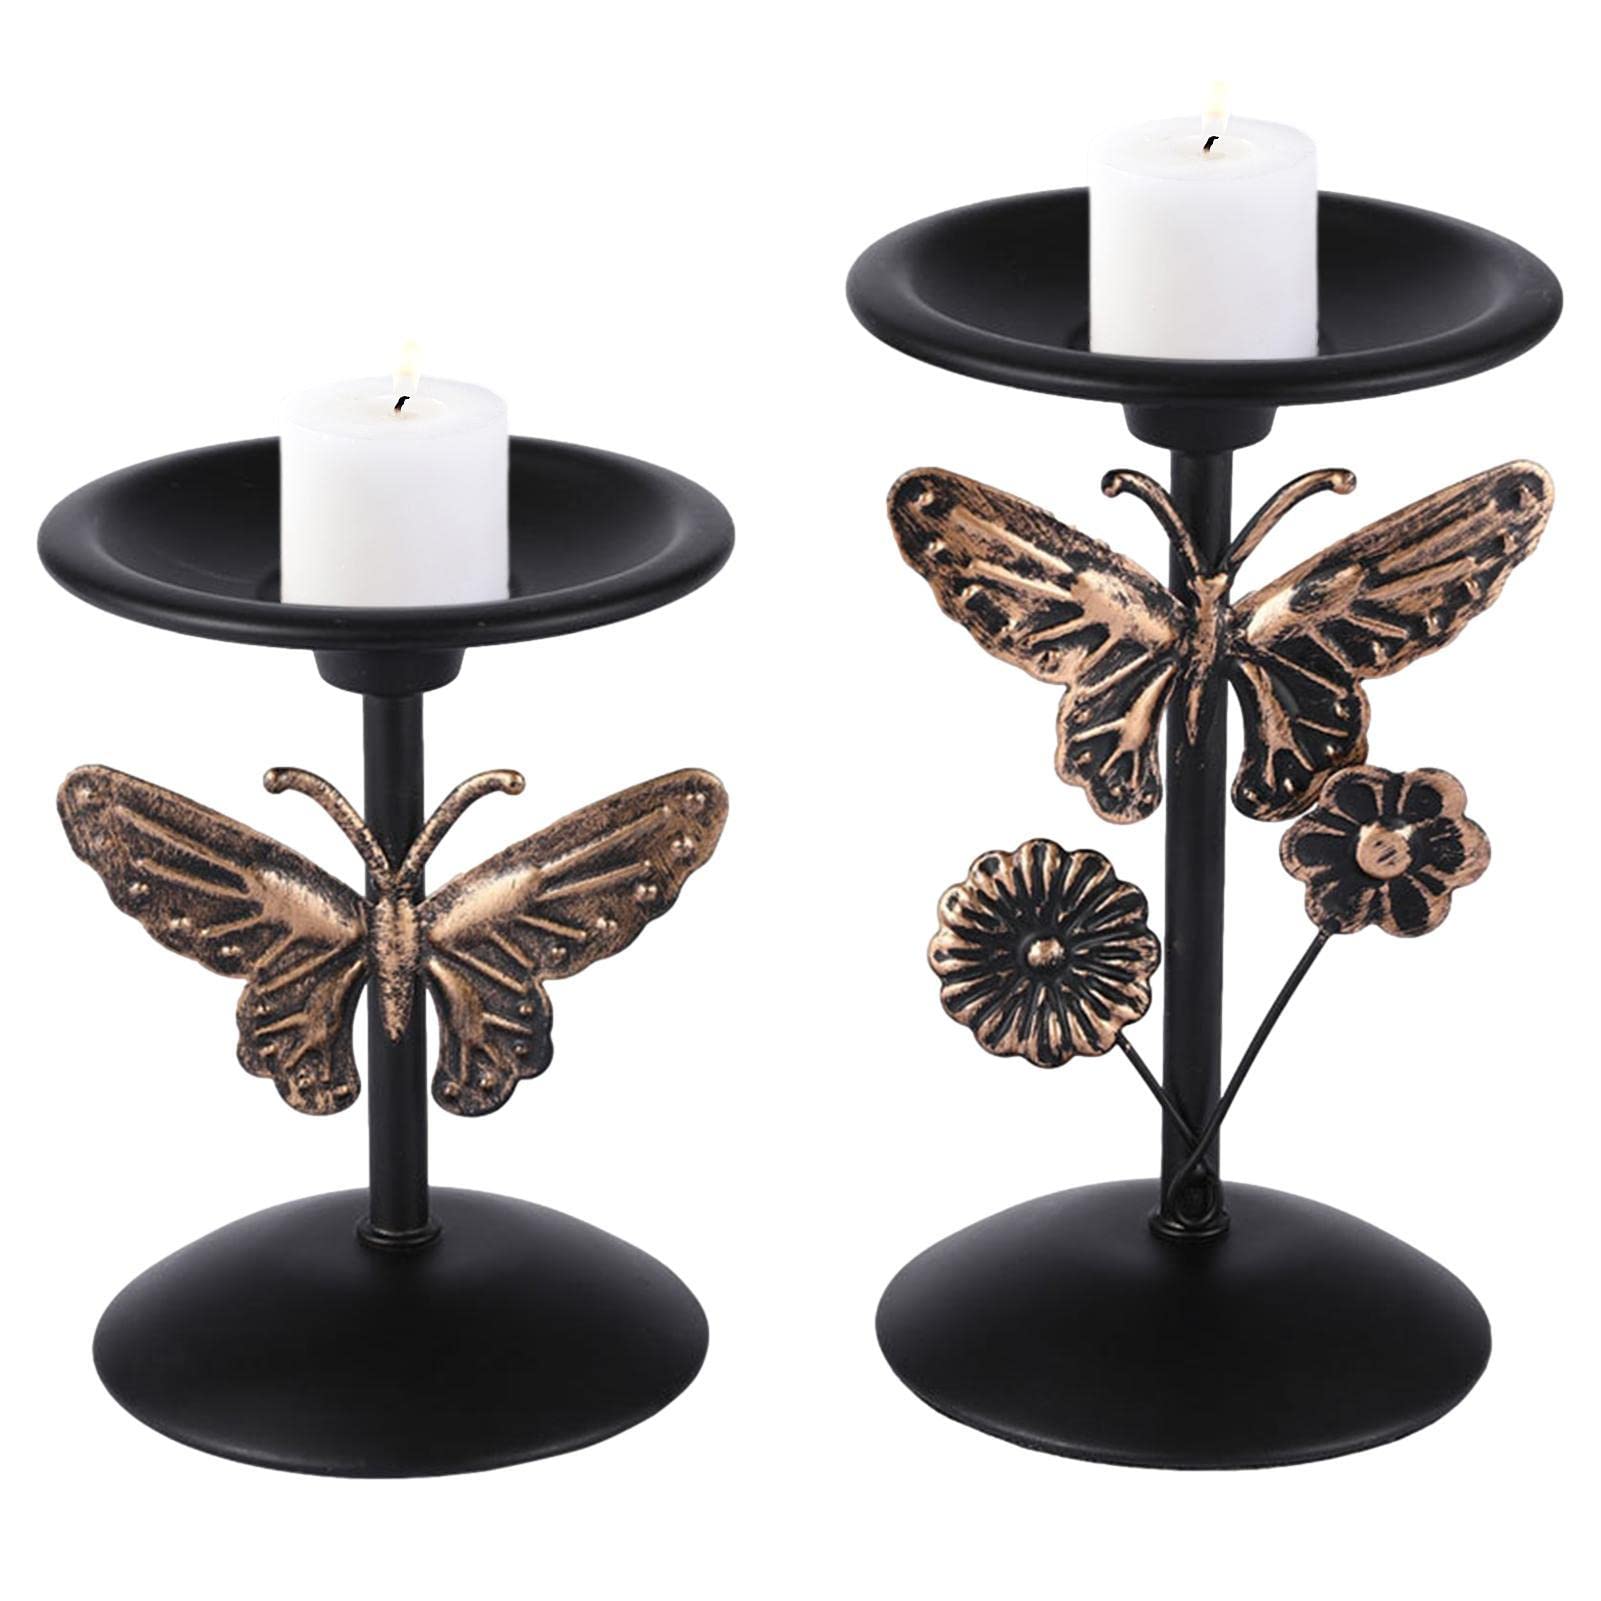 5 Pcs キャンドルスタンド - ペデスタル レトロ キャンドル ホルダー ブラック メタル 2 個セット装飾台座、ヴィンテージの蝶と花のデザ